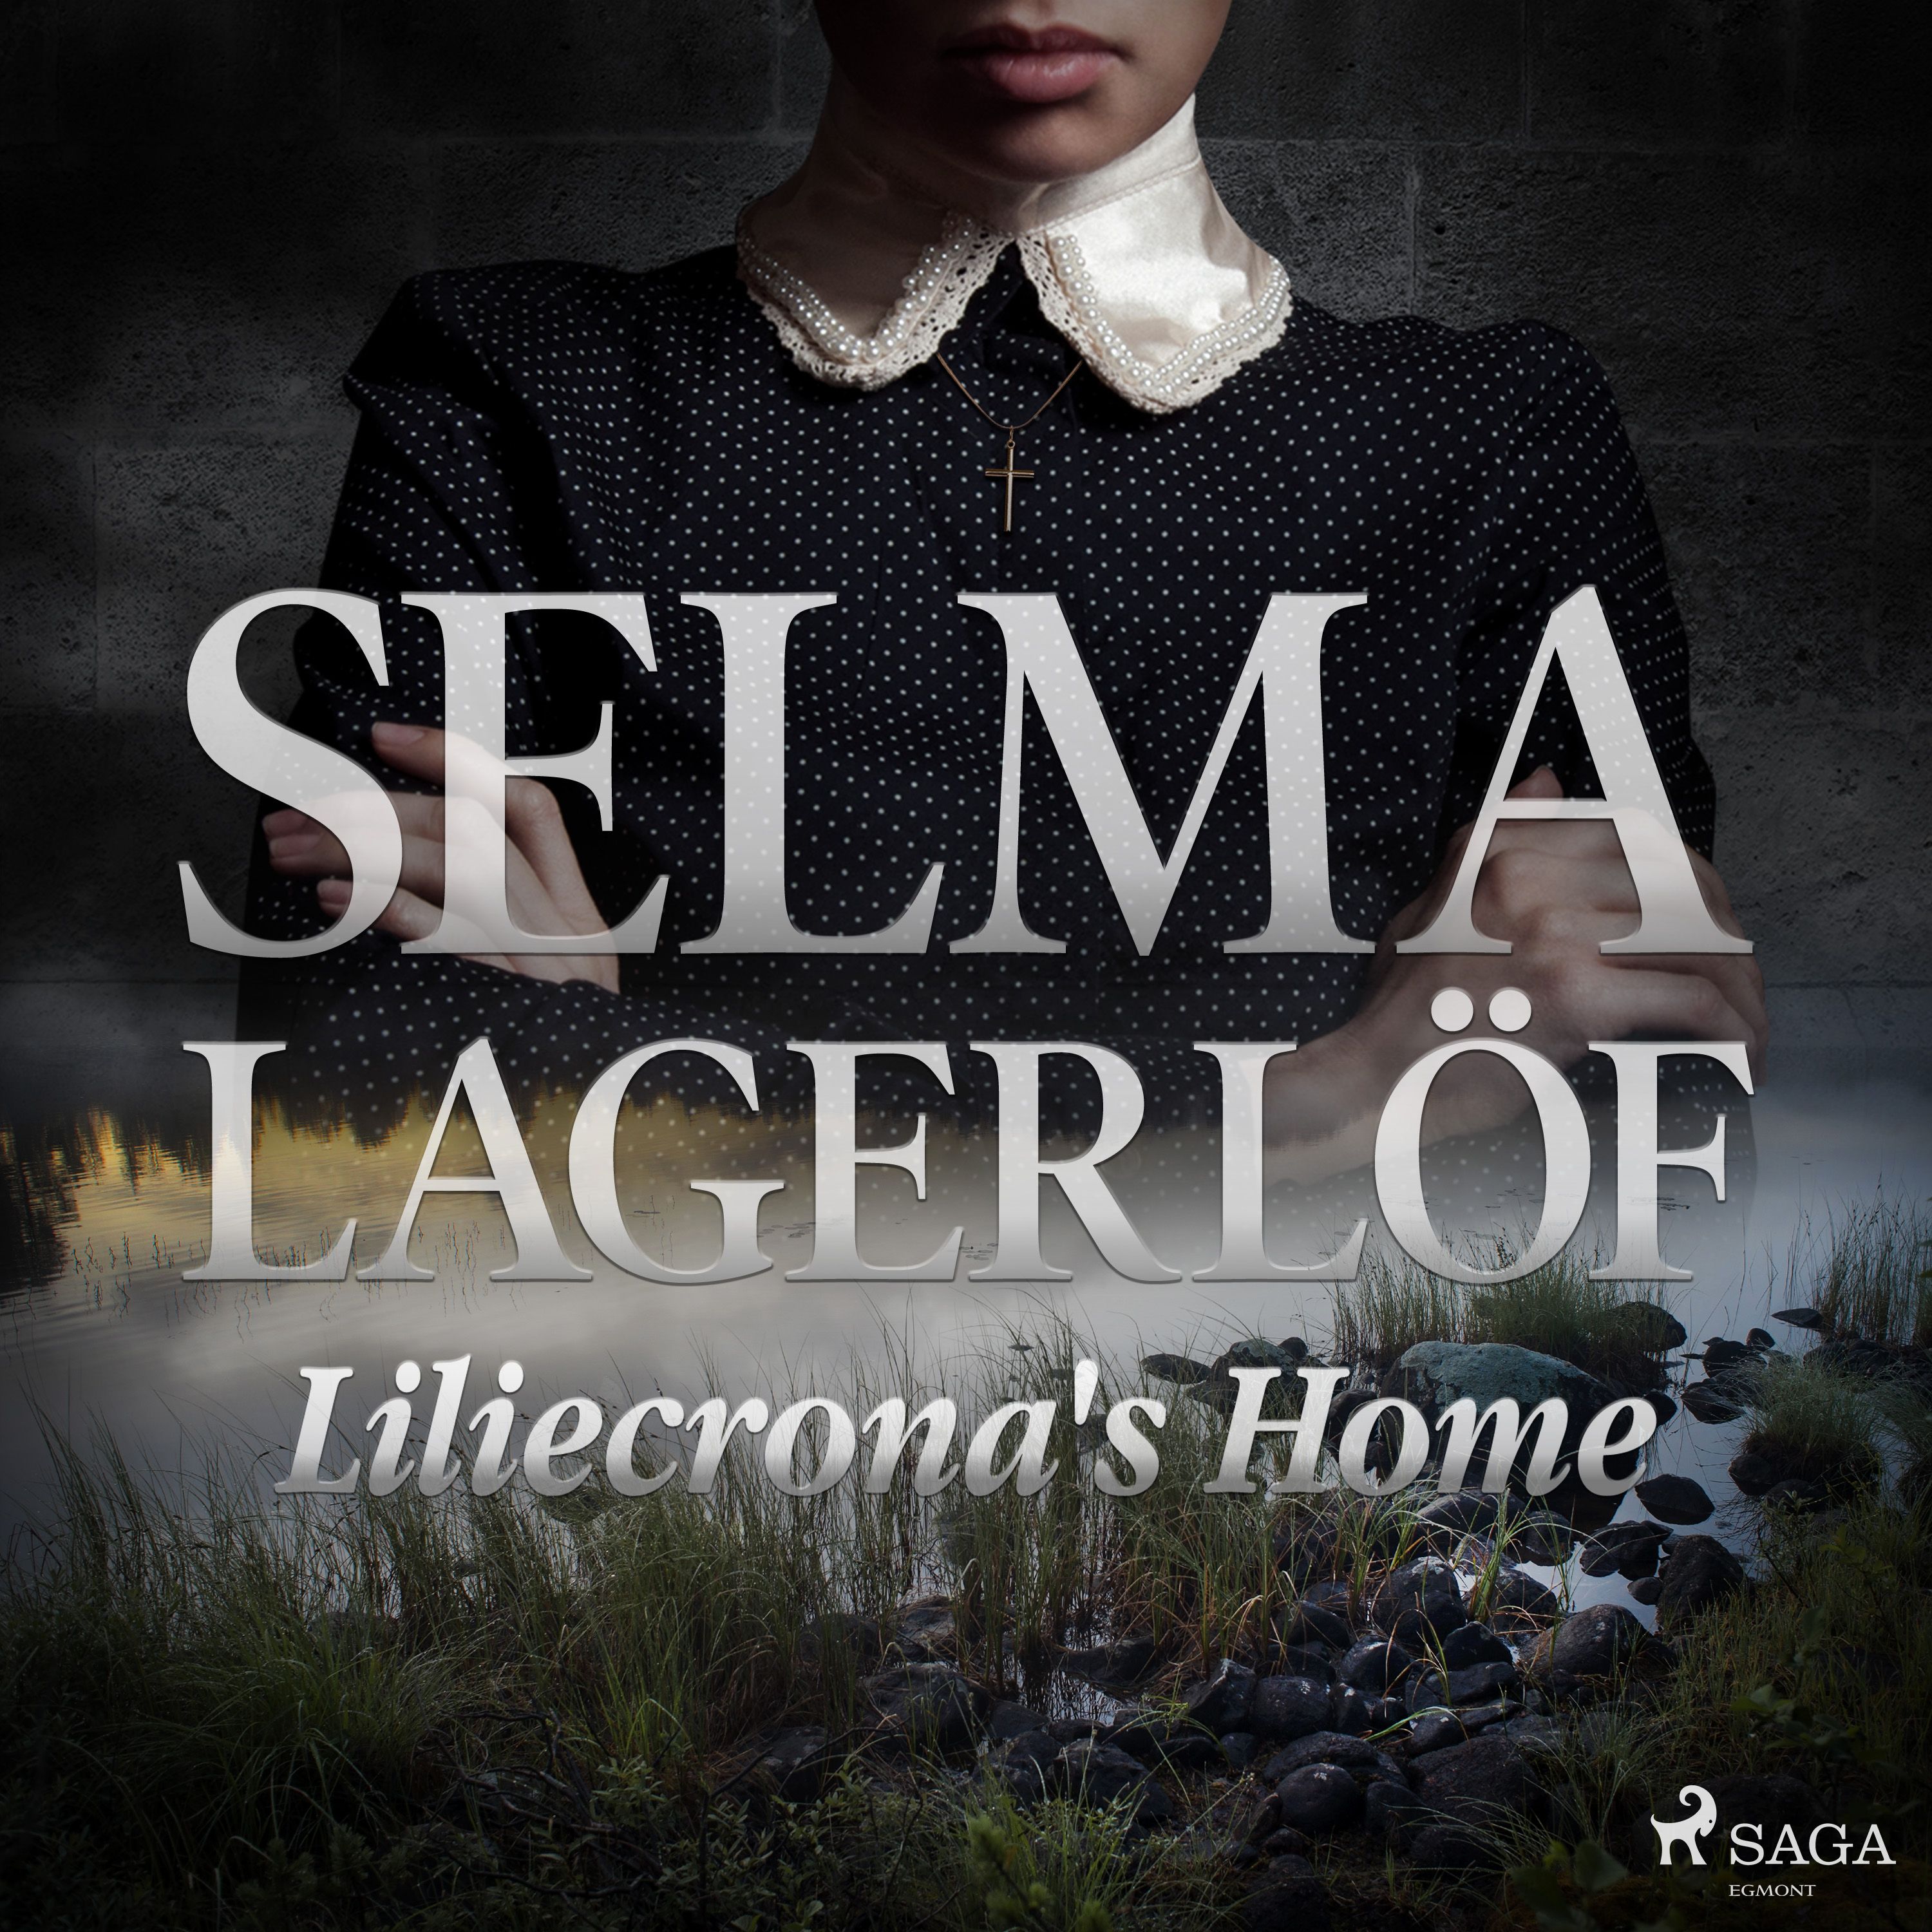 Liliecrona's Home, audiobook by Selma Lagerlöf